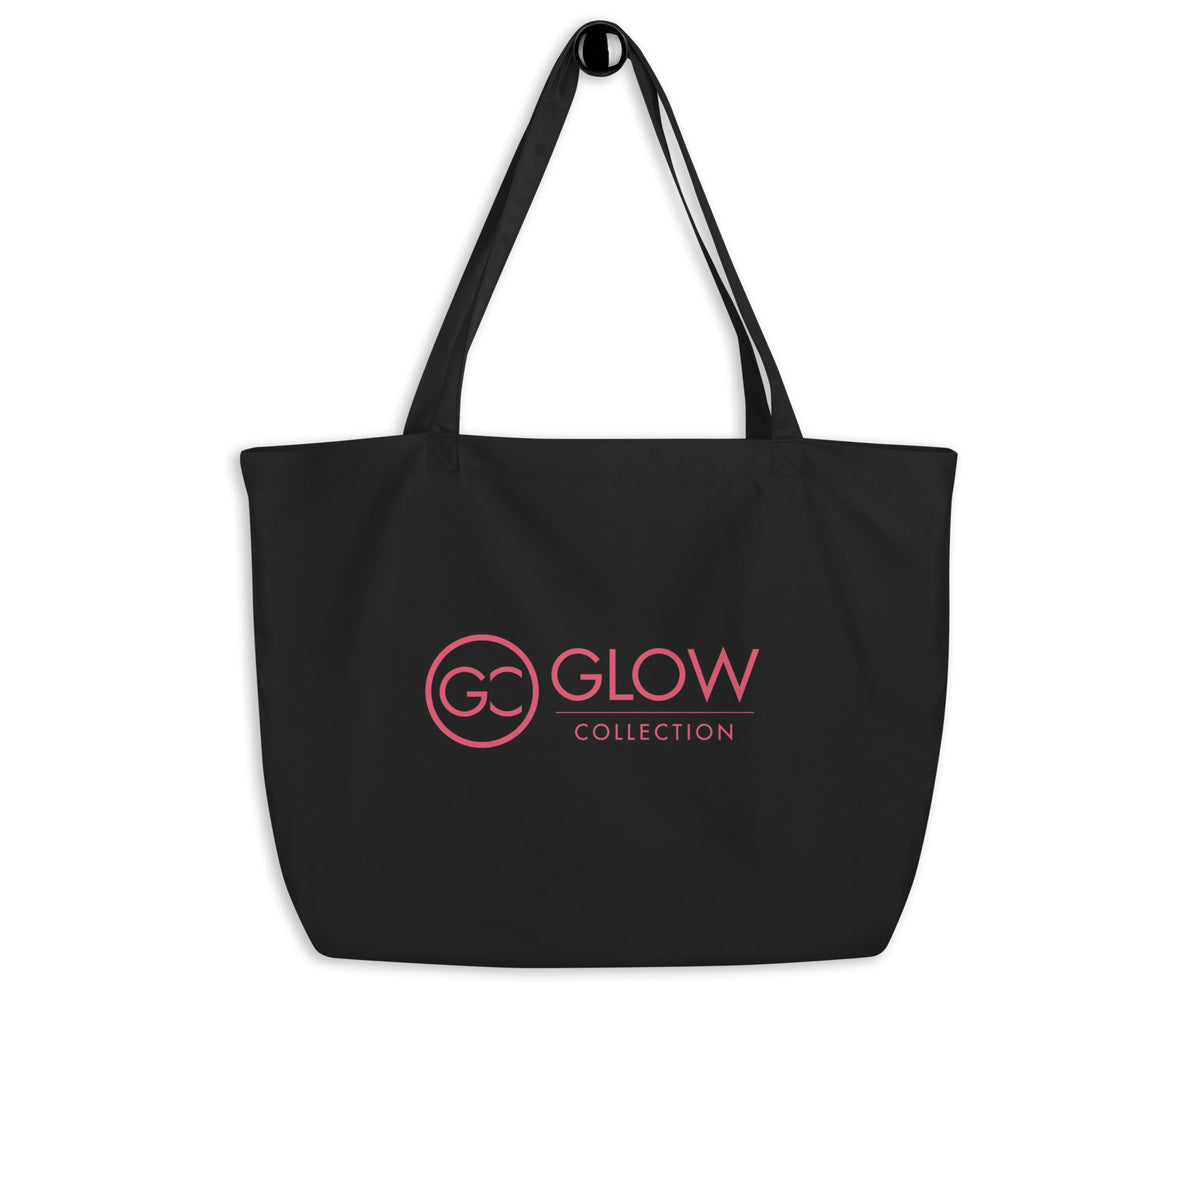 Glow Collection Large organic tote bag